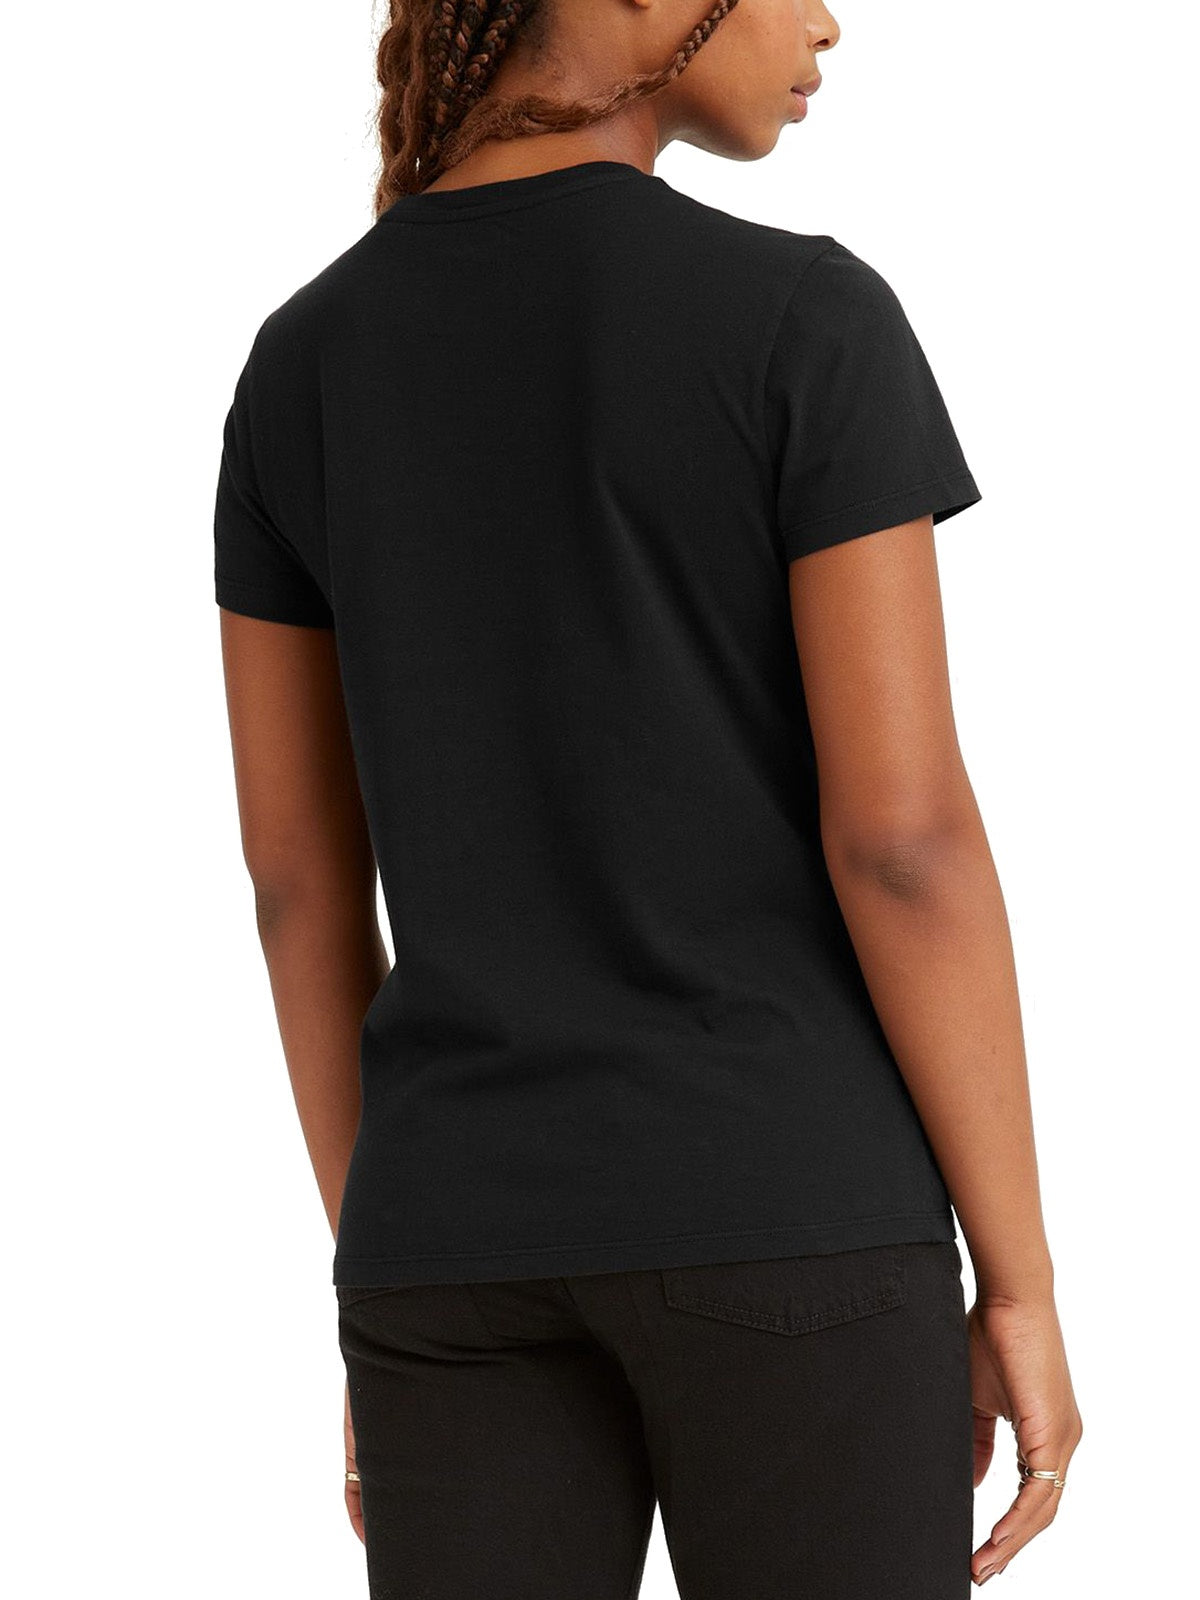 T-shirt Donna Levi's - La T-Shirt Perfect - Nero